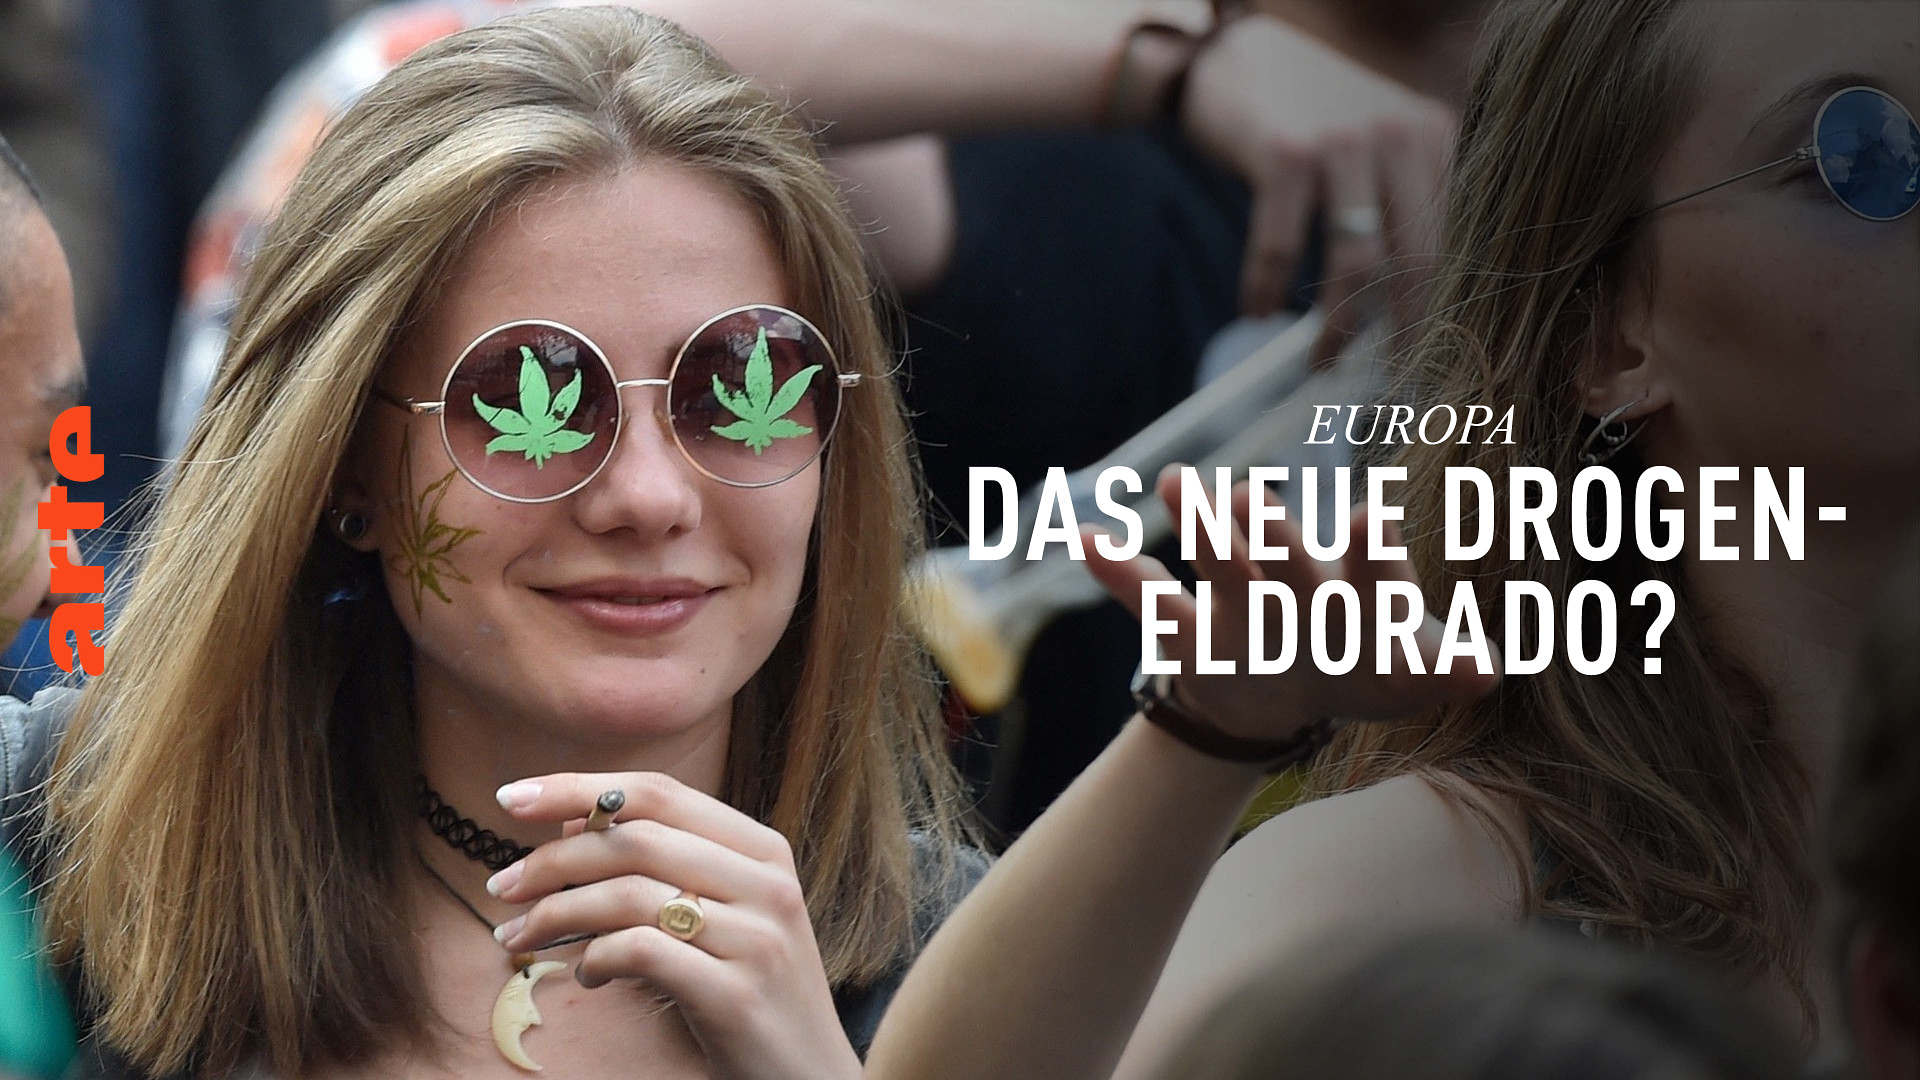 Europa, das neue Drogen-Eldorado?